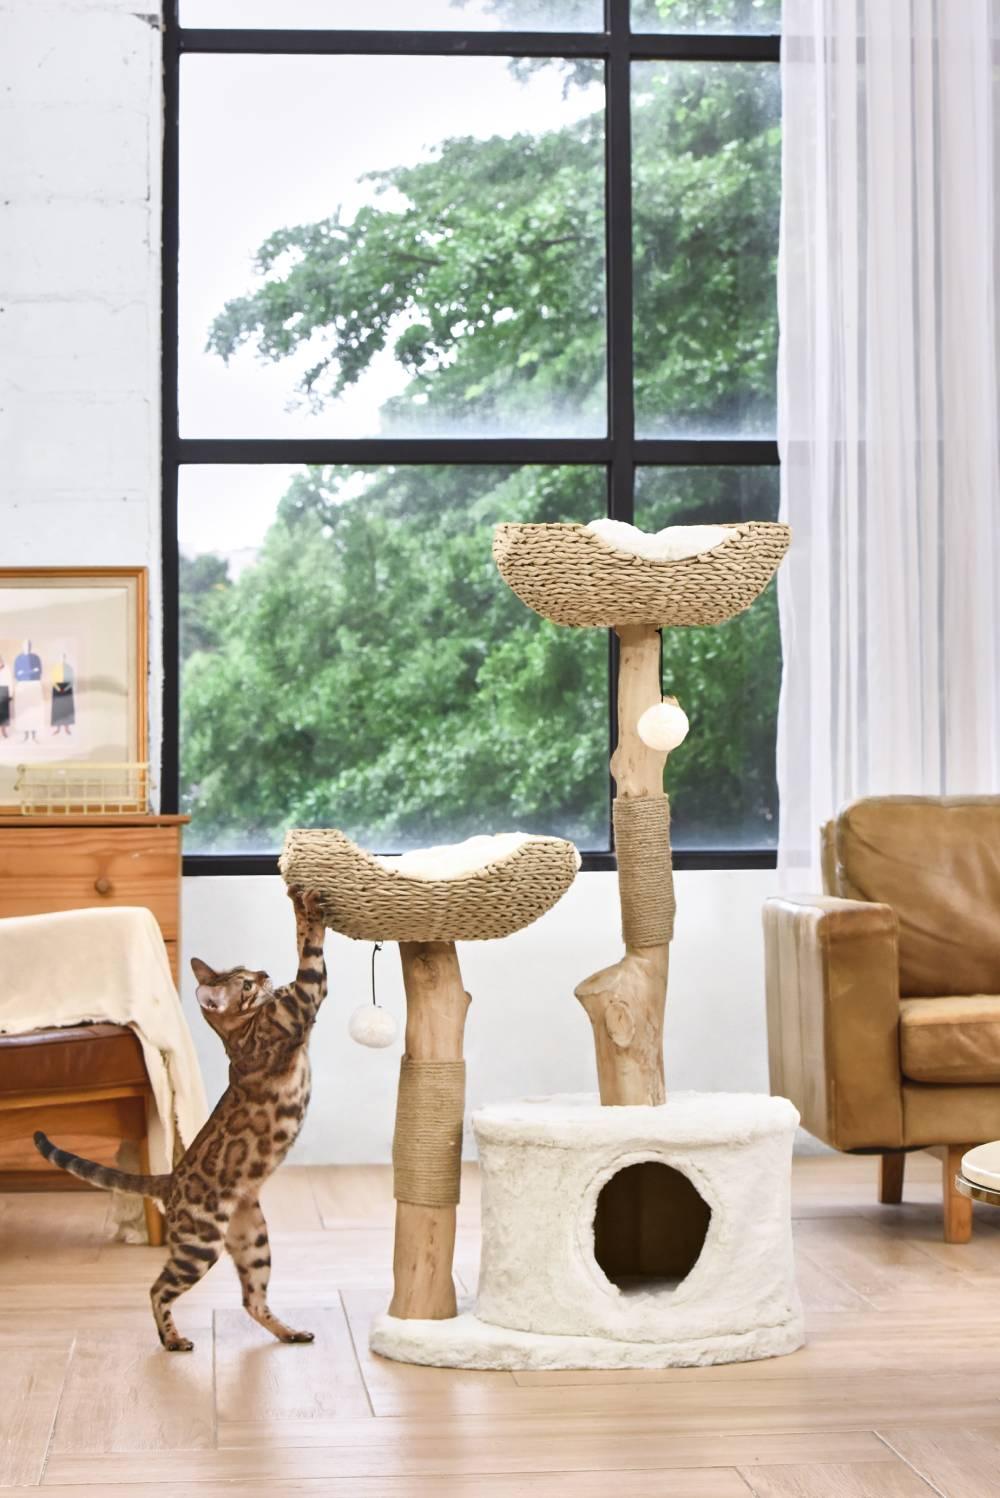 MICHU Premium Real Wood Cat Tower / Large